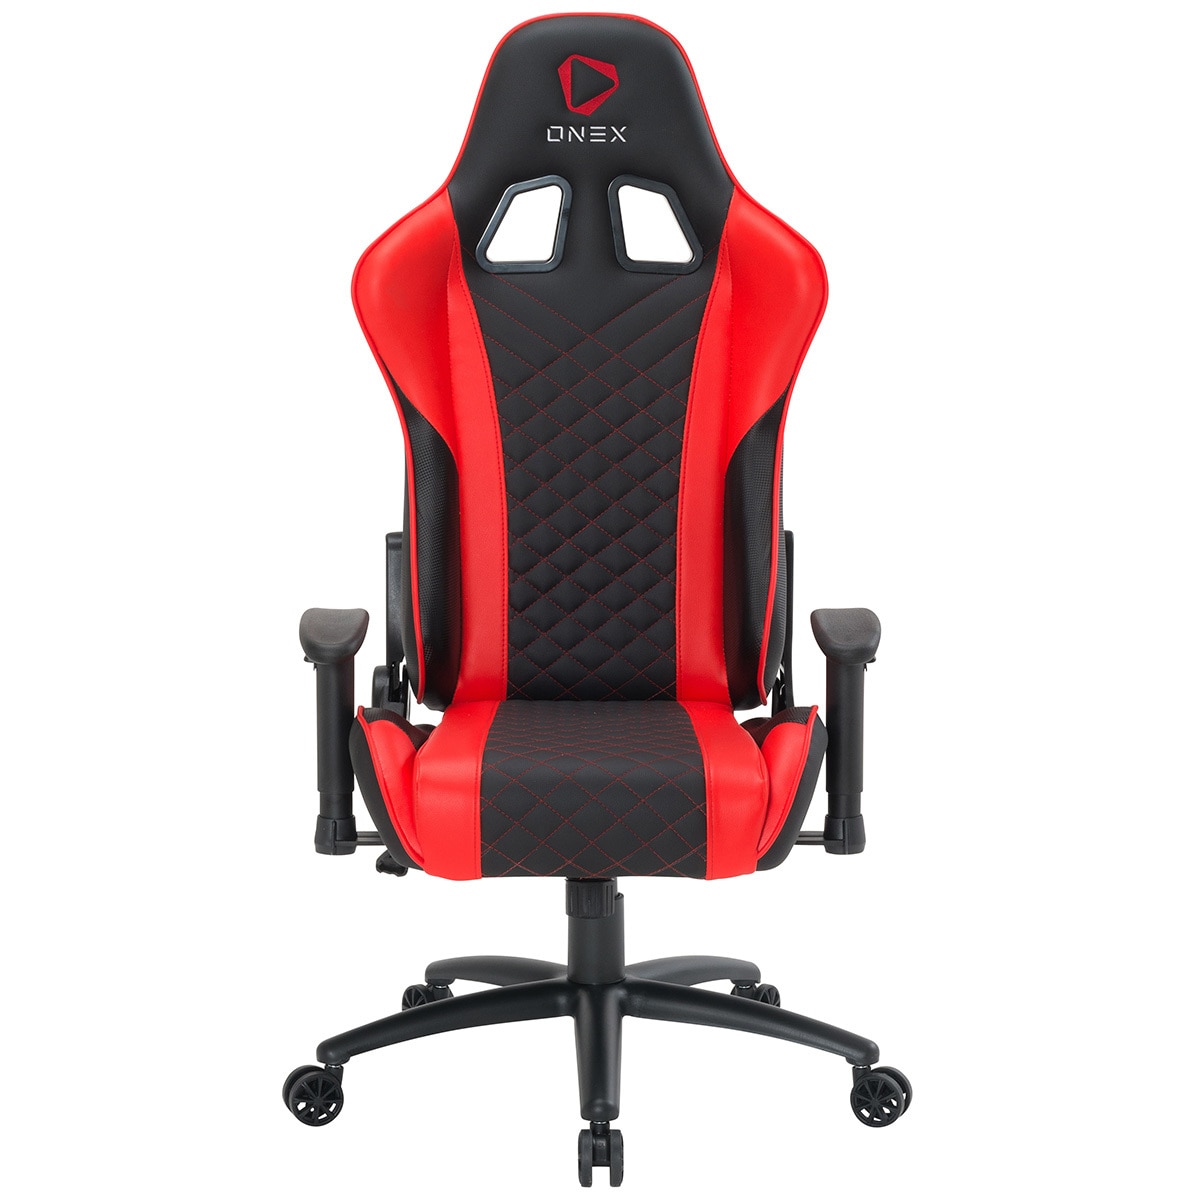 Onex Gaming Chair Gx3 Black Red Costco Australia